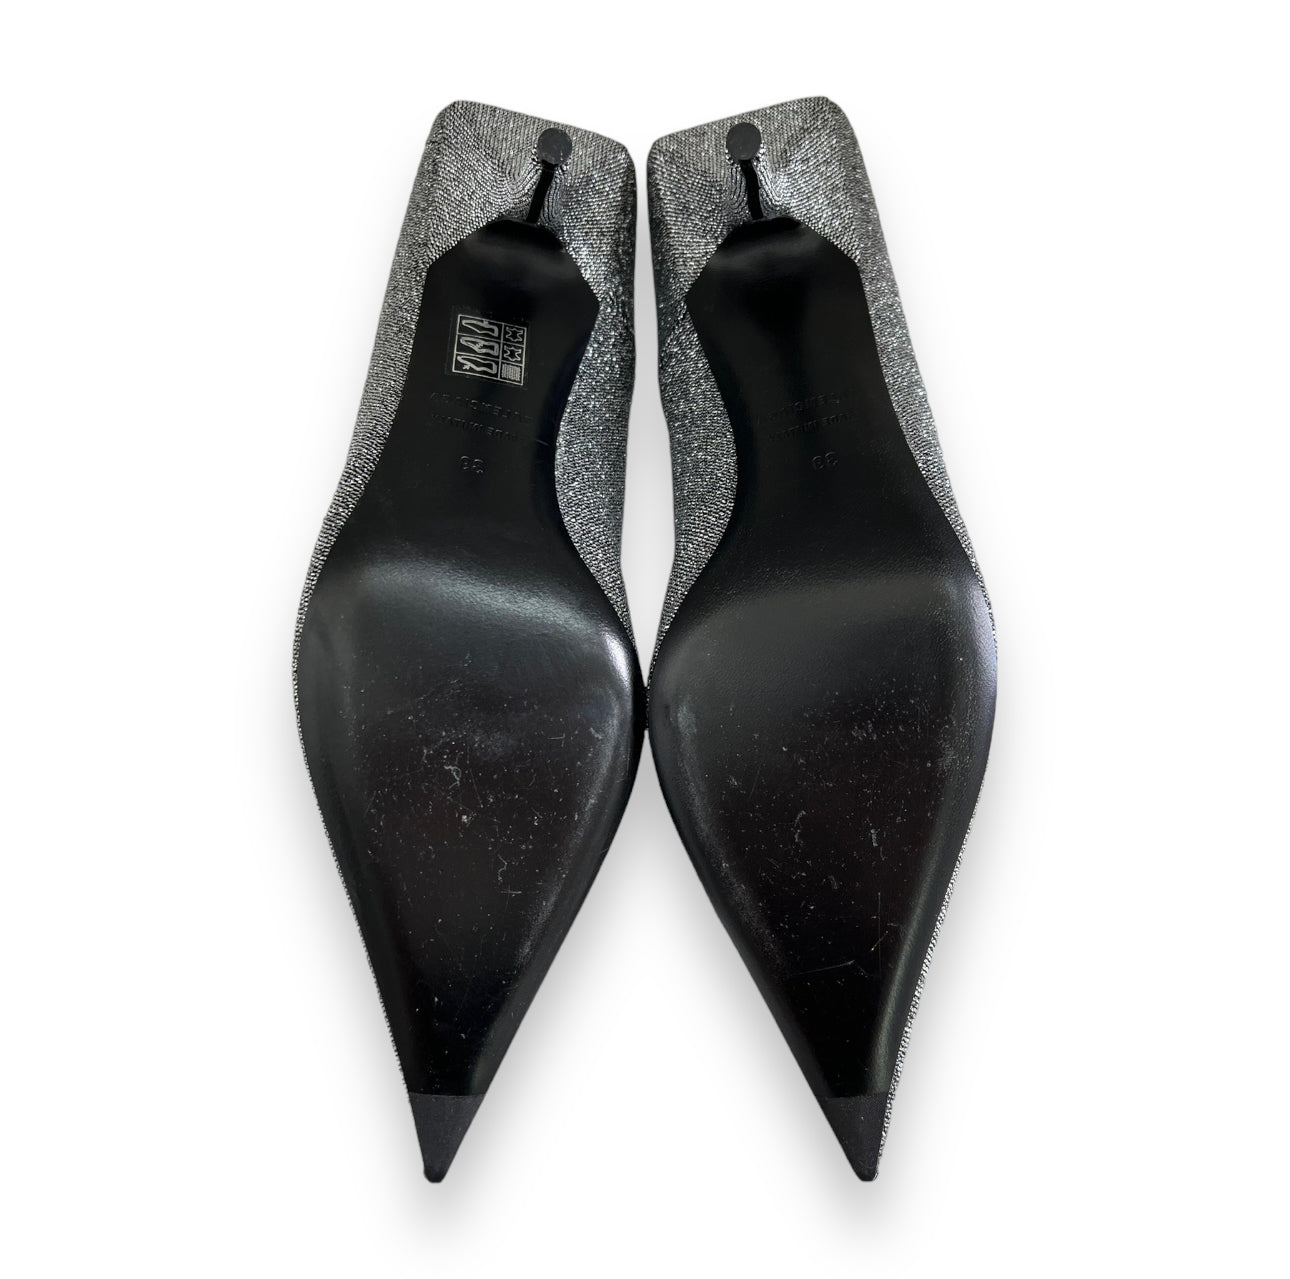 New Balenciaga Knife Silver Pumps with Box Size 39